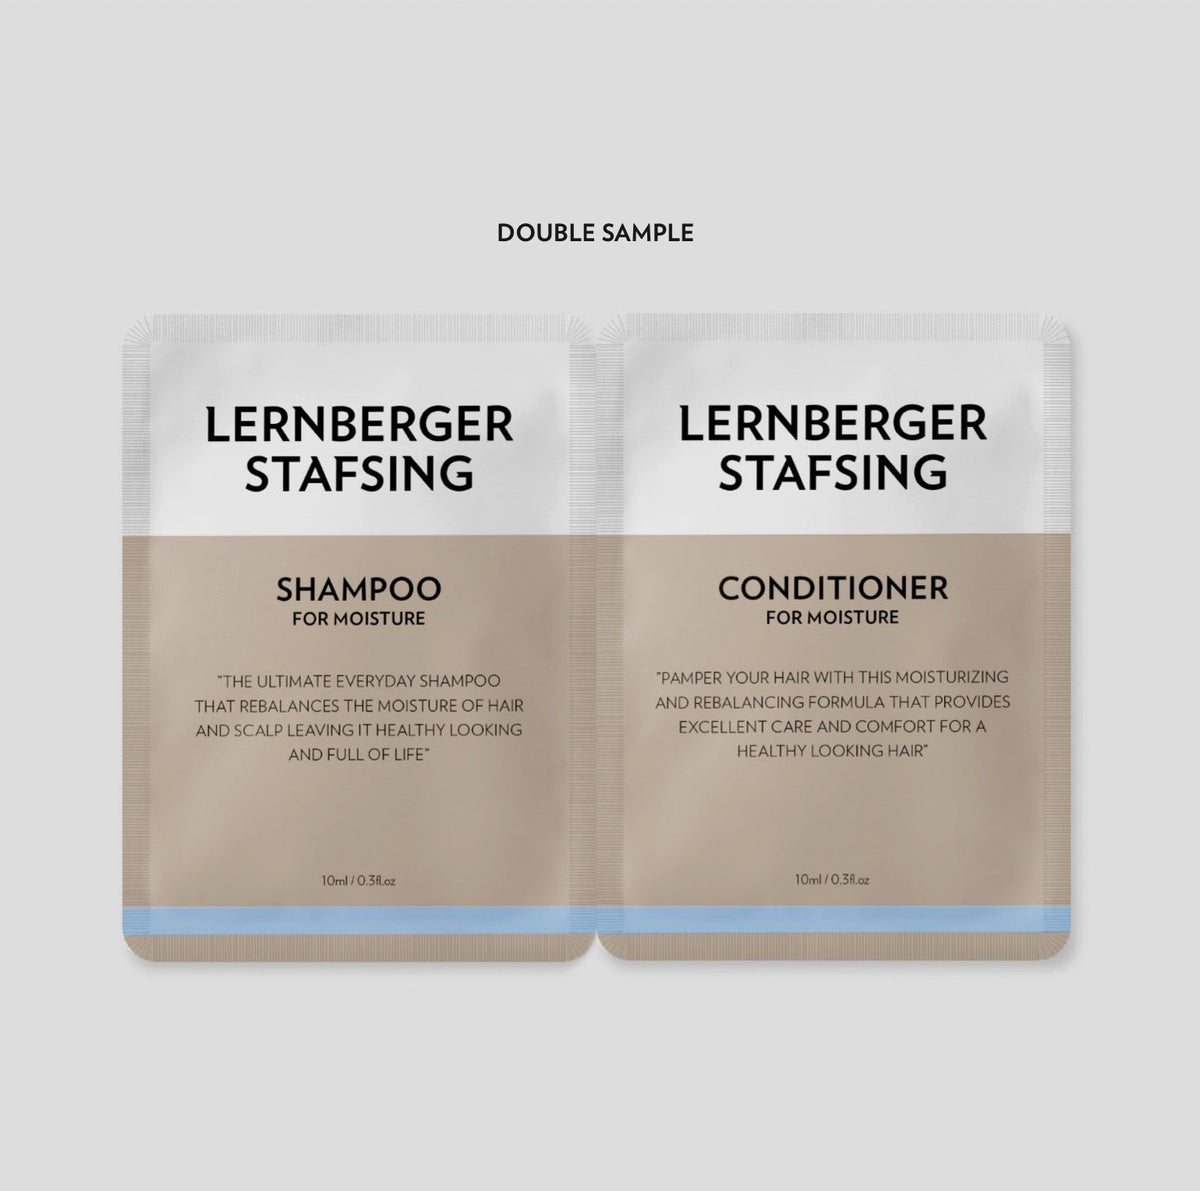 Lernberger Stafsing Shampoo & Conditioner for Moisture (2 * 10ml Sample)